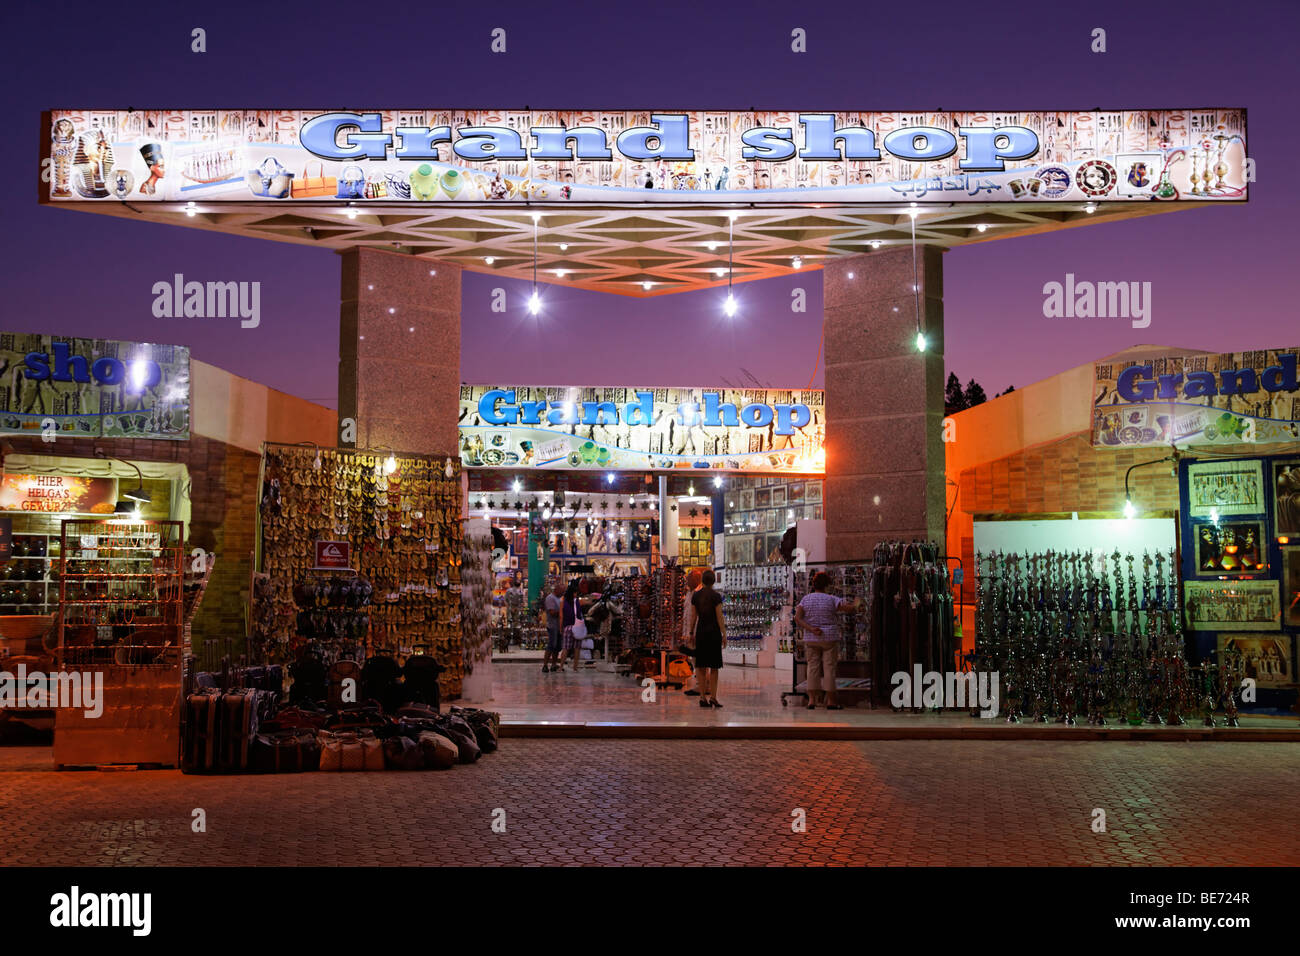 Souvenir-Shop, beleuchtet, Abend, Yussuf Afifi Road, Hurghada, Ägypten, Rotes Meer, Afrika Stockfoto